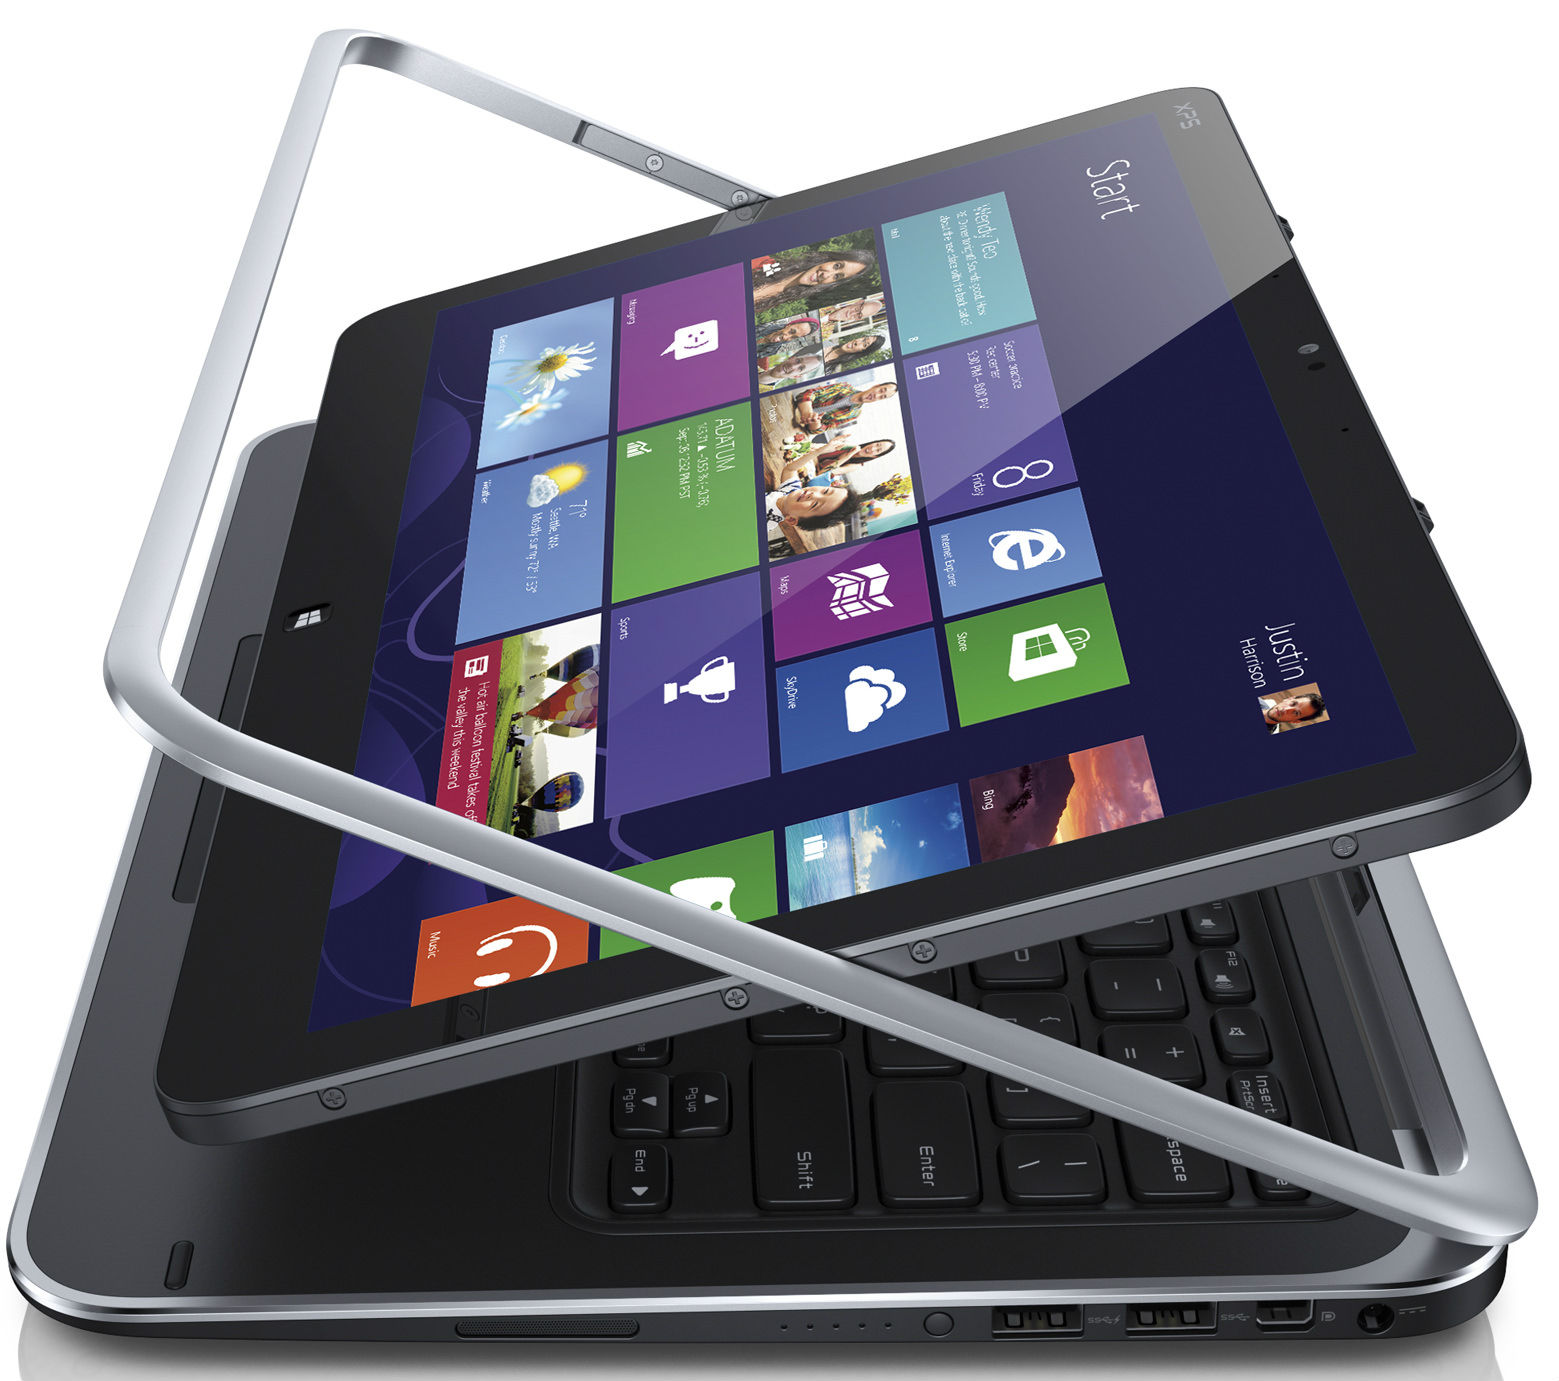 Dell XPS 12 (9Q2358256iA) Ultrabook (Core i5 3rd Gen/8 GB/256 GB SSD/Windows 8) Price